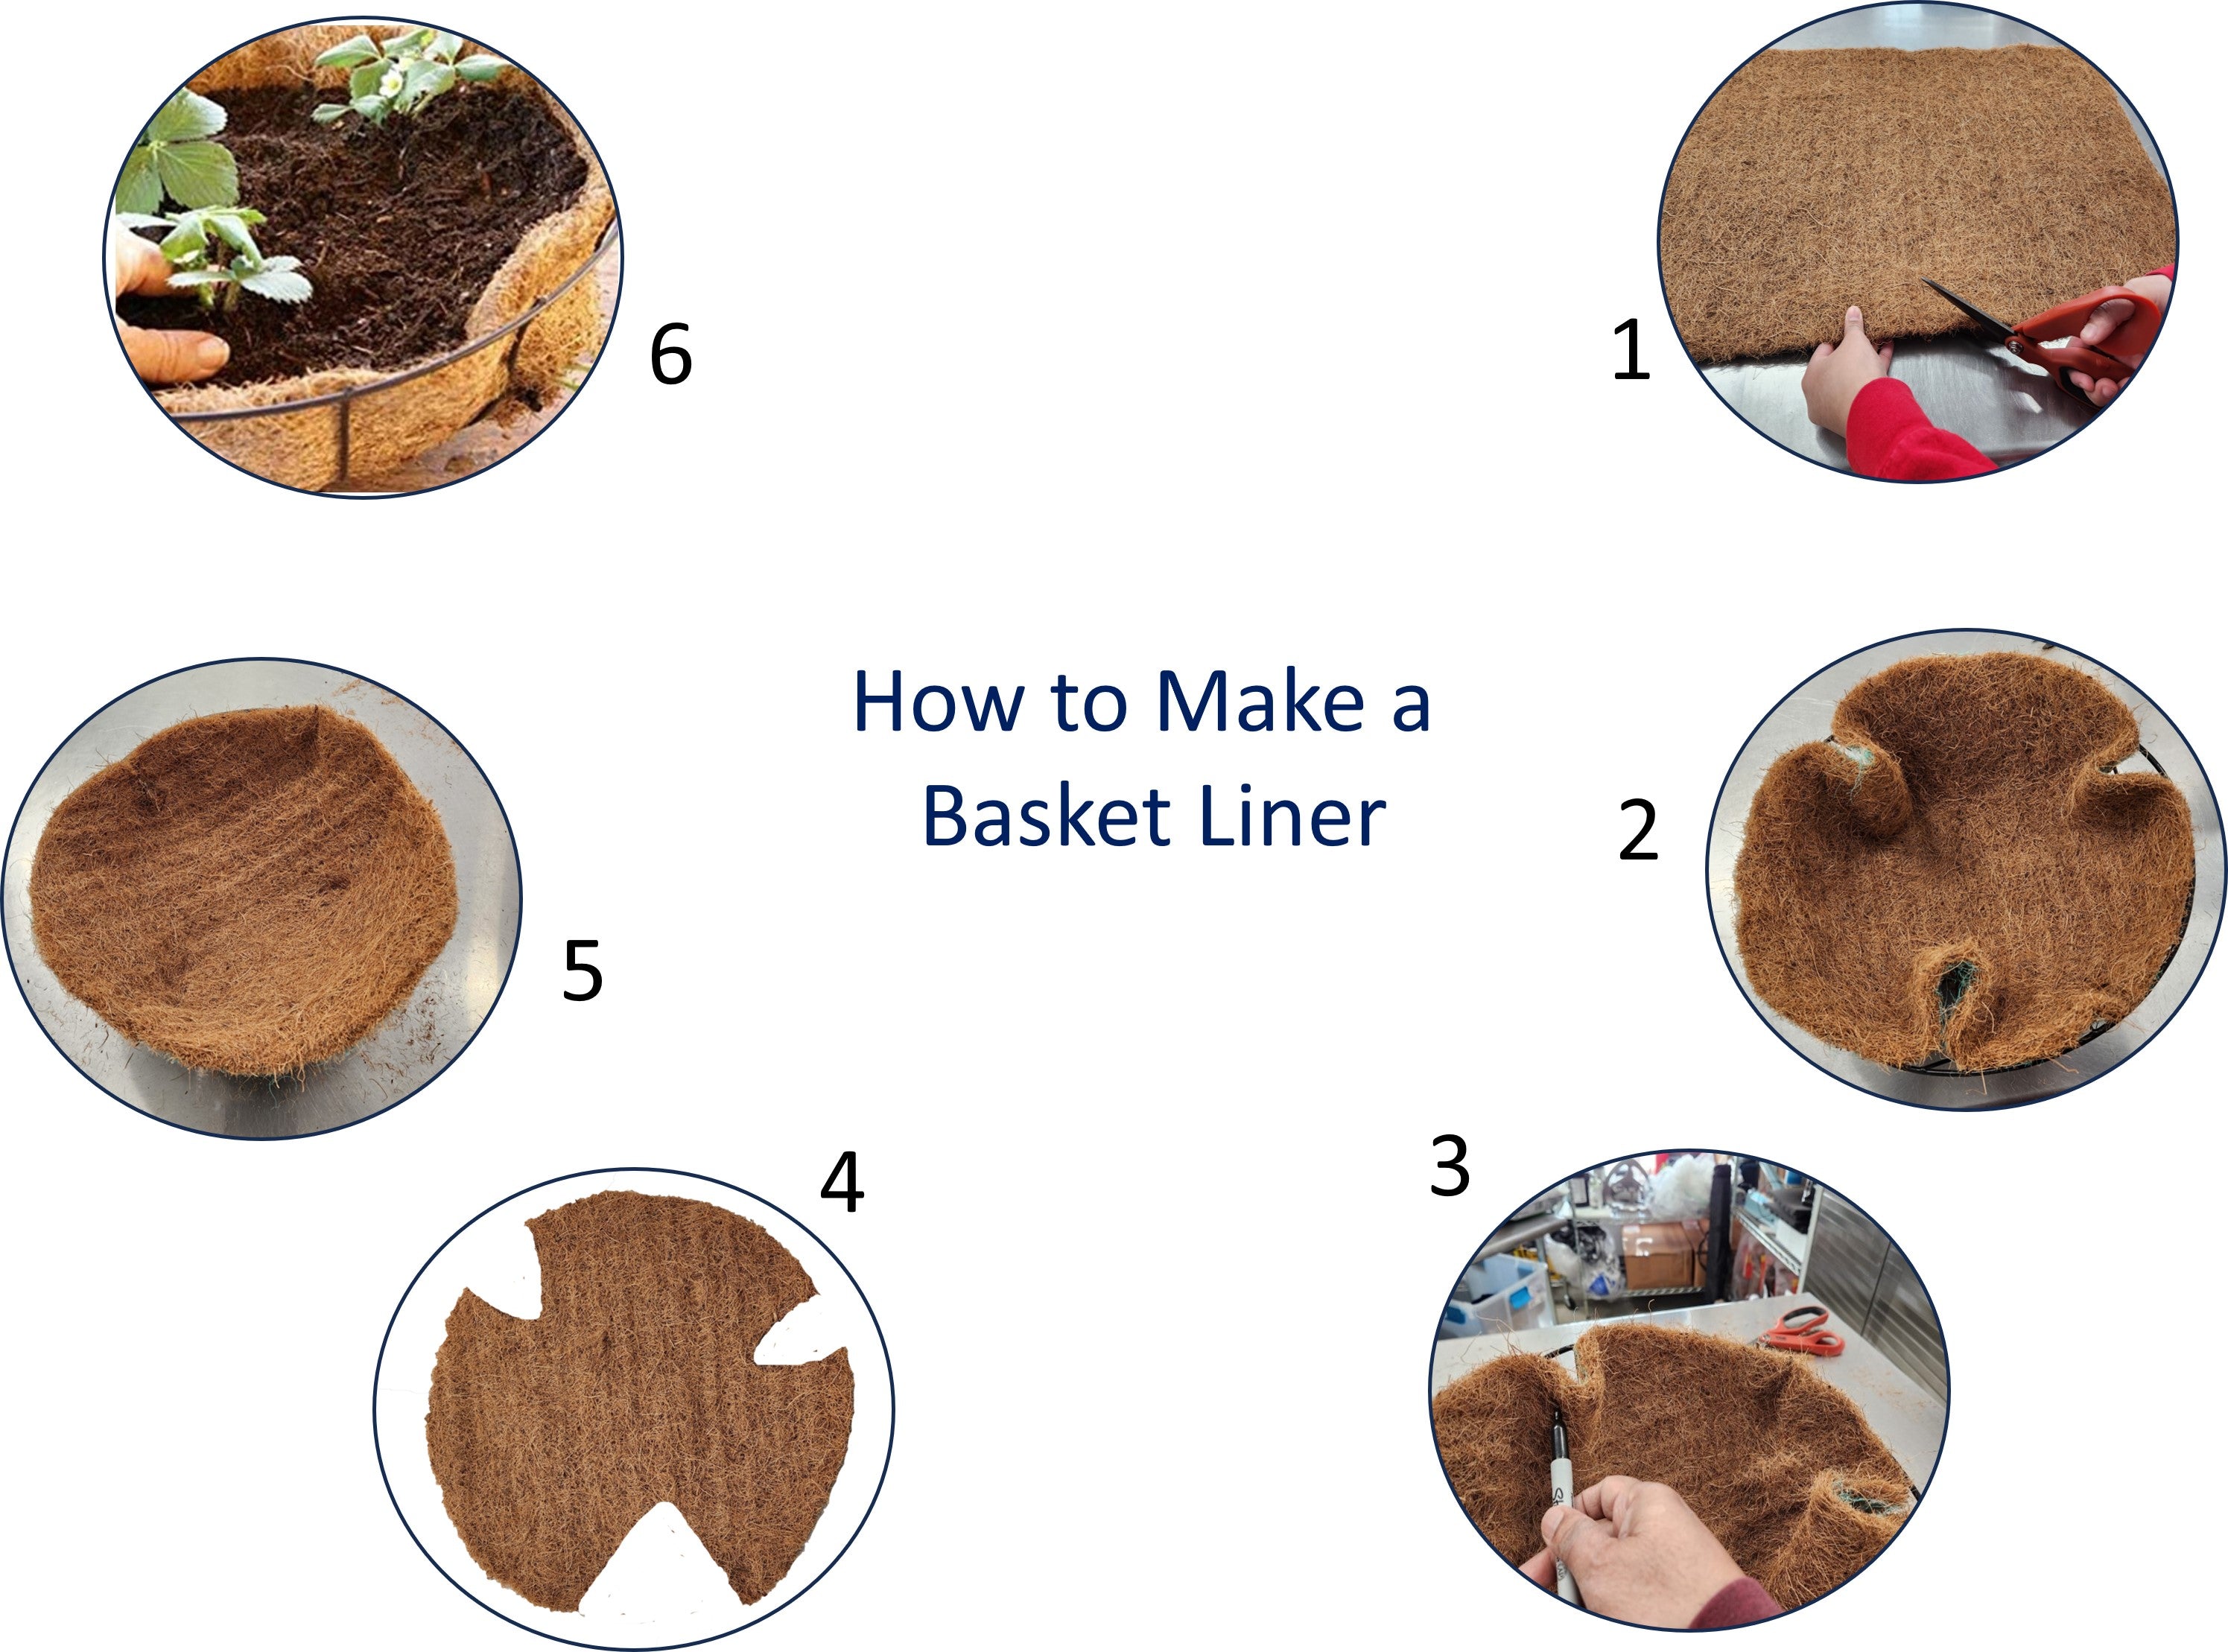 Coco Coir Sheet Roll - Pack of 3 - Coco Fiber Mat Roll - for Planters, Basket Liner, Garden Bed, Mulch Mat, Pet Bedding Liner etc.,